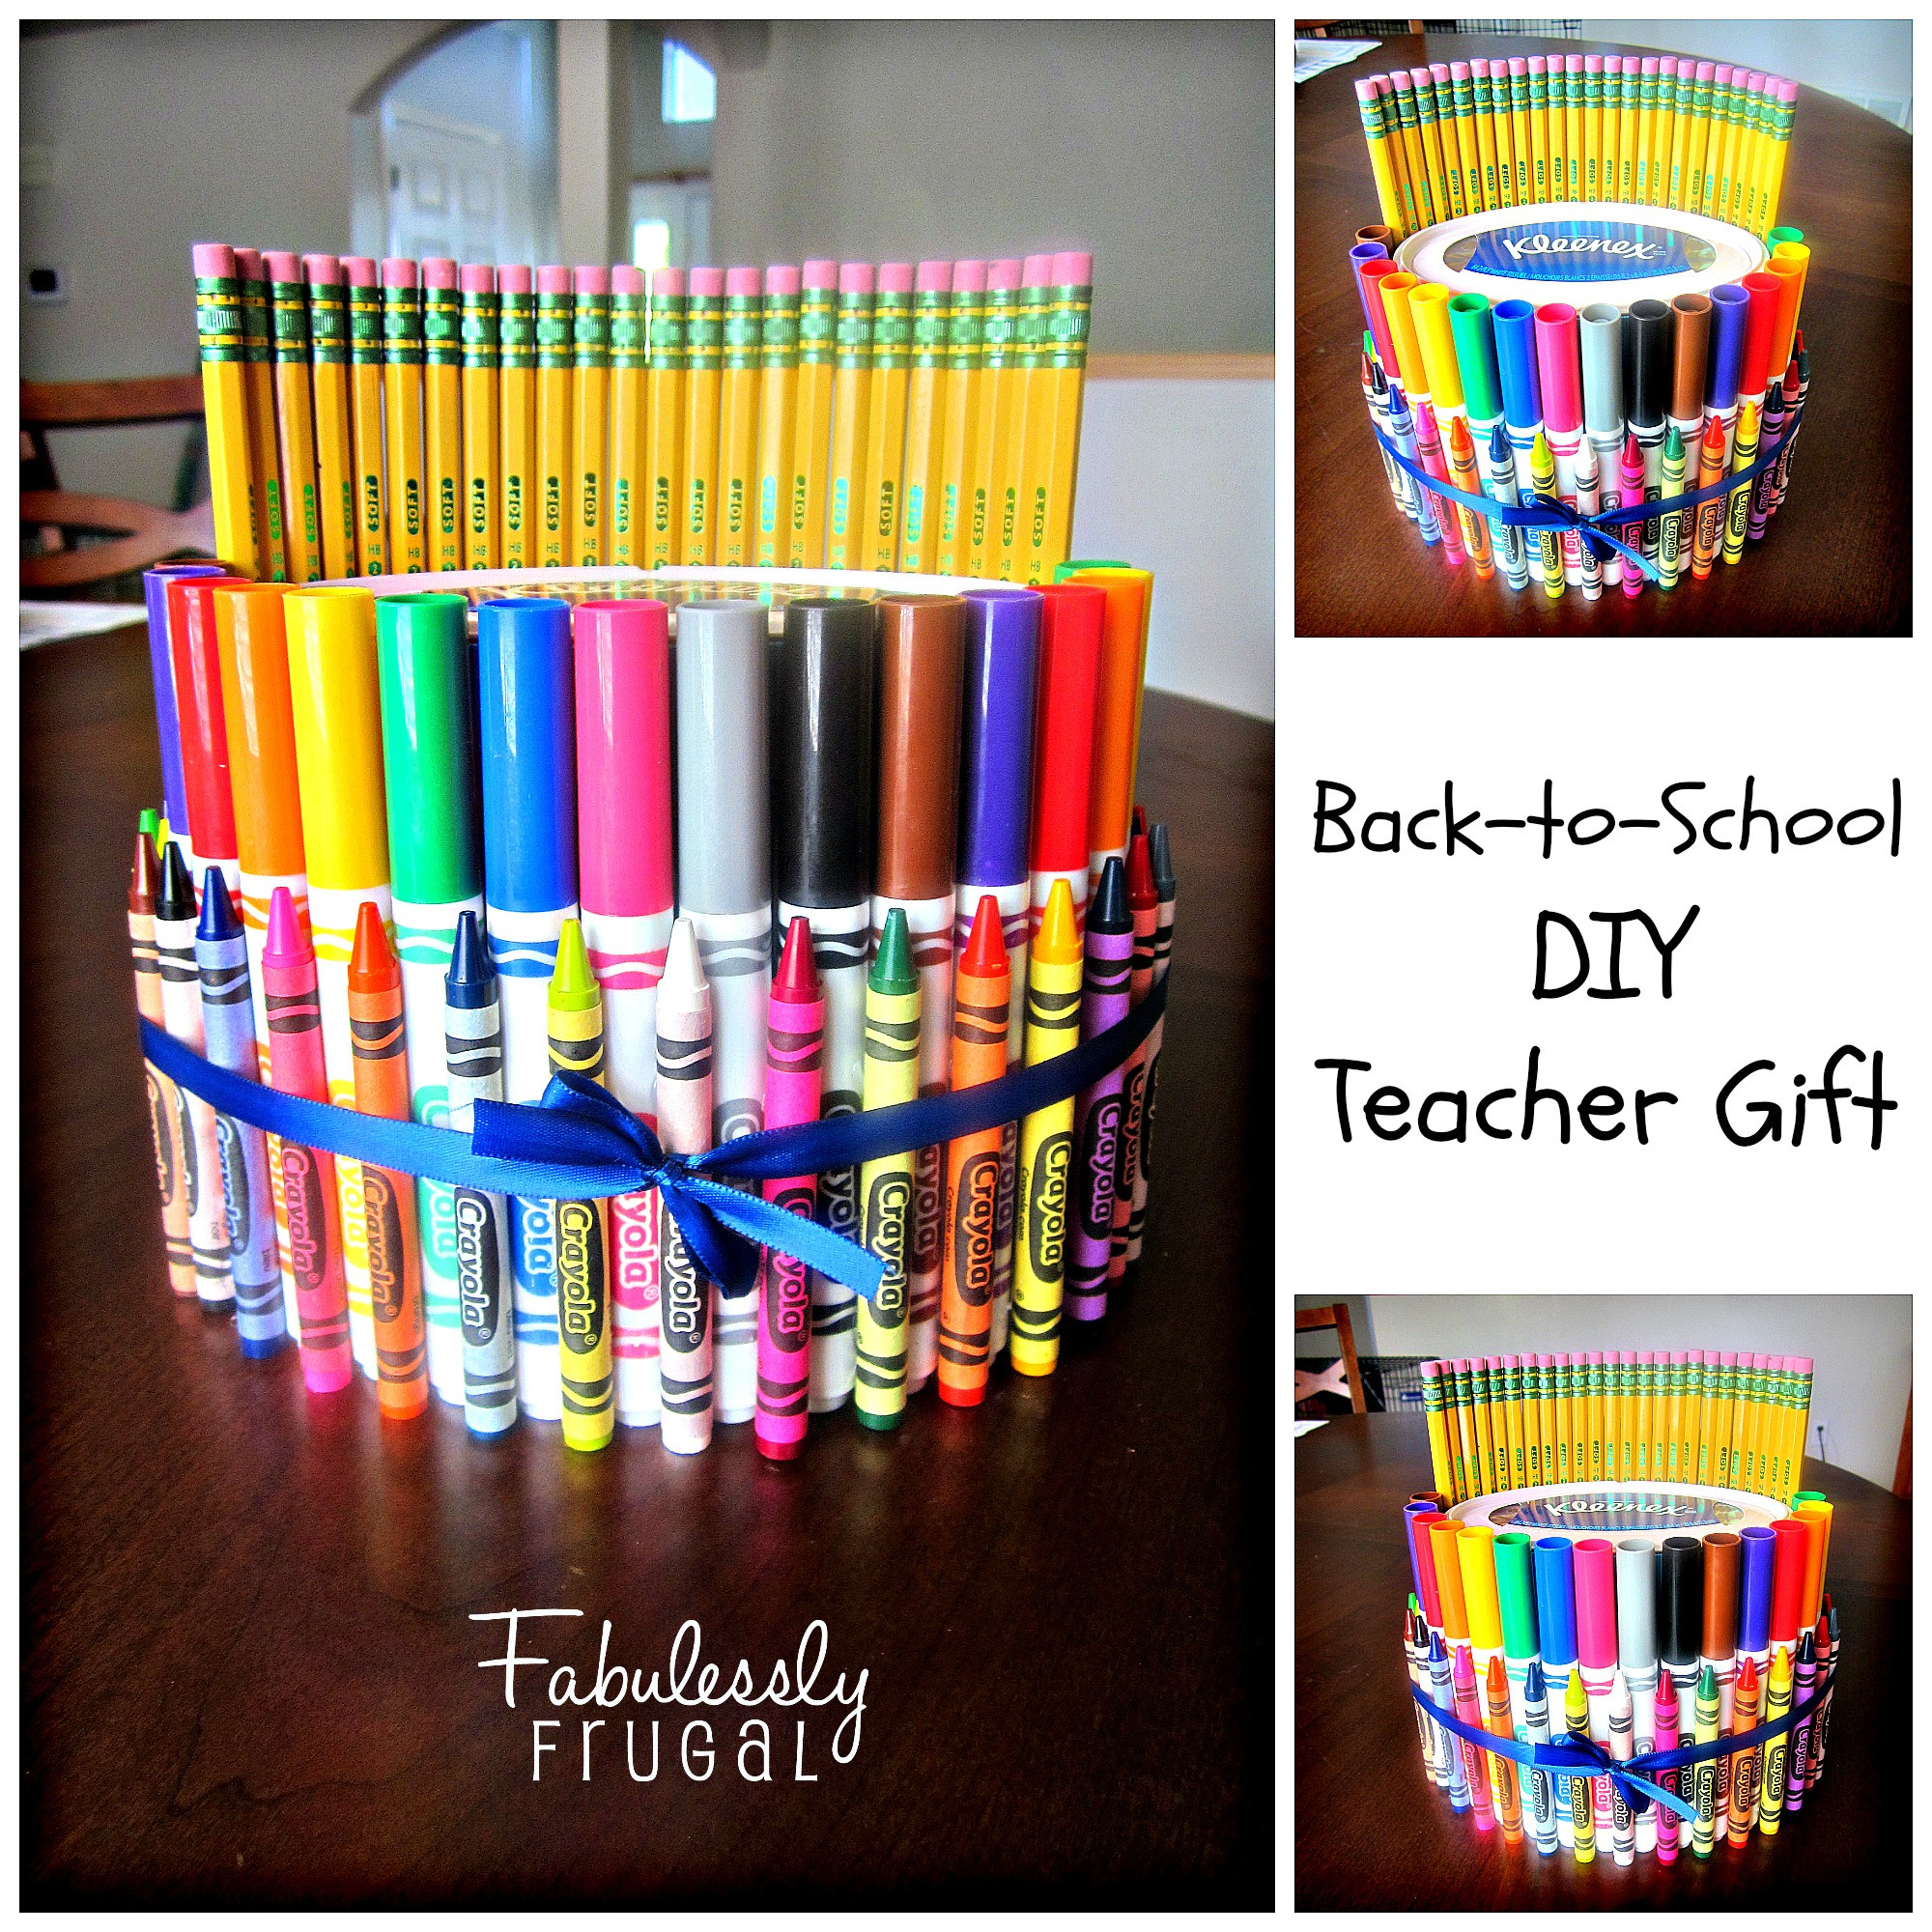 DIY Teachers Gifts
 DIY Teacher Gift for Back to School